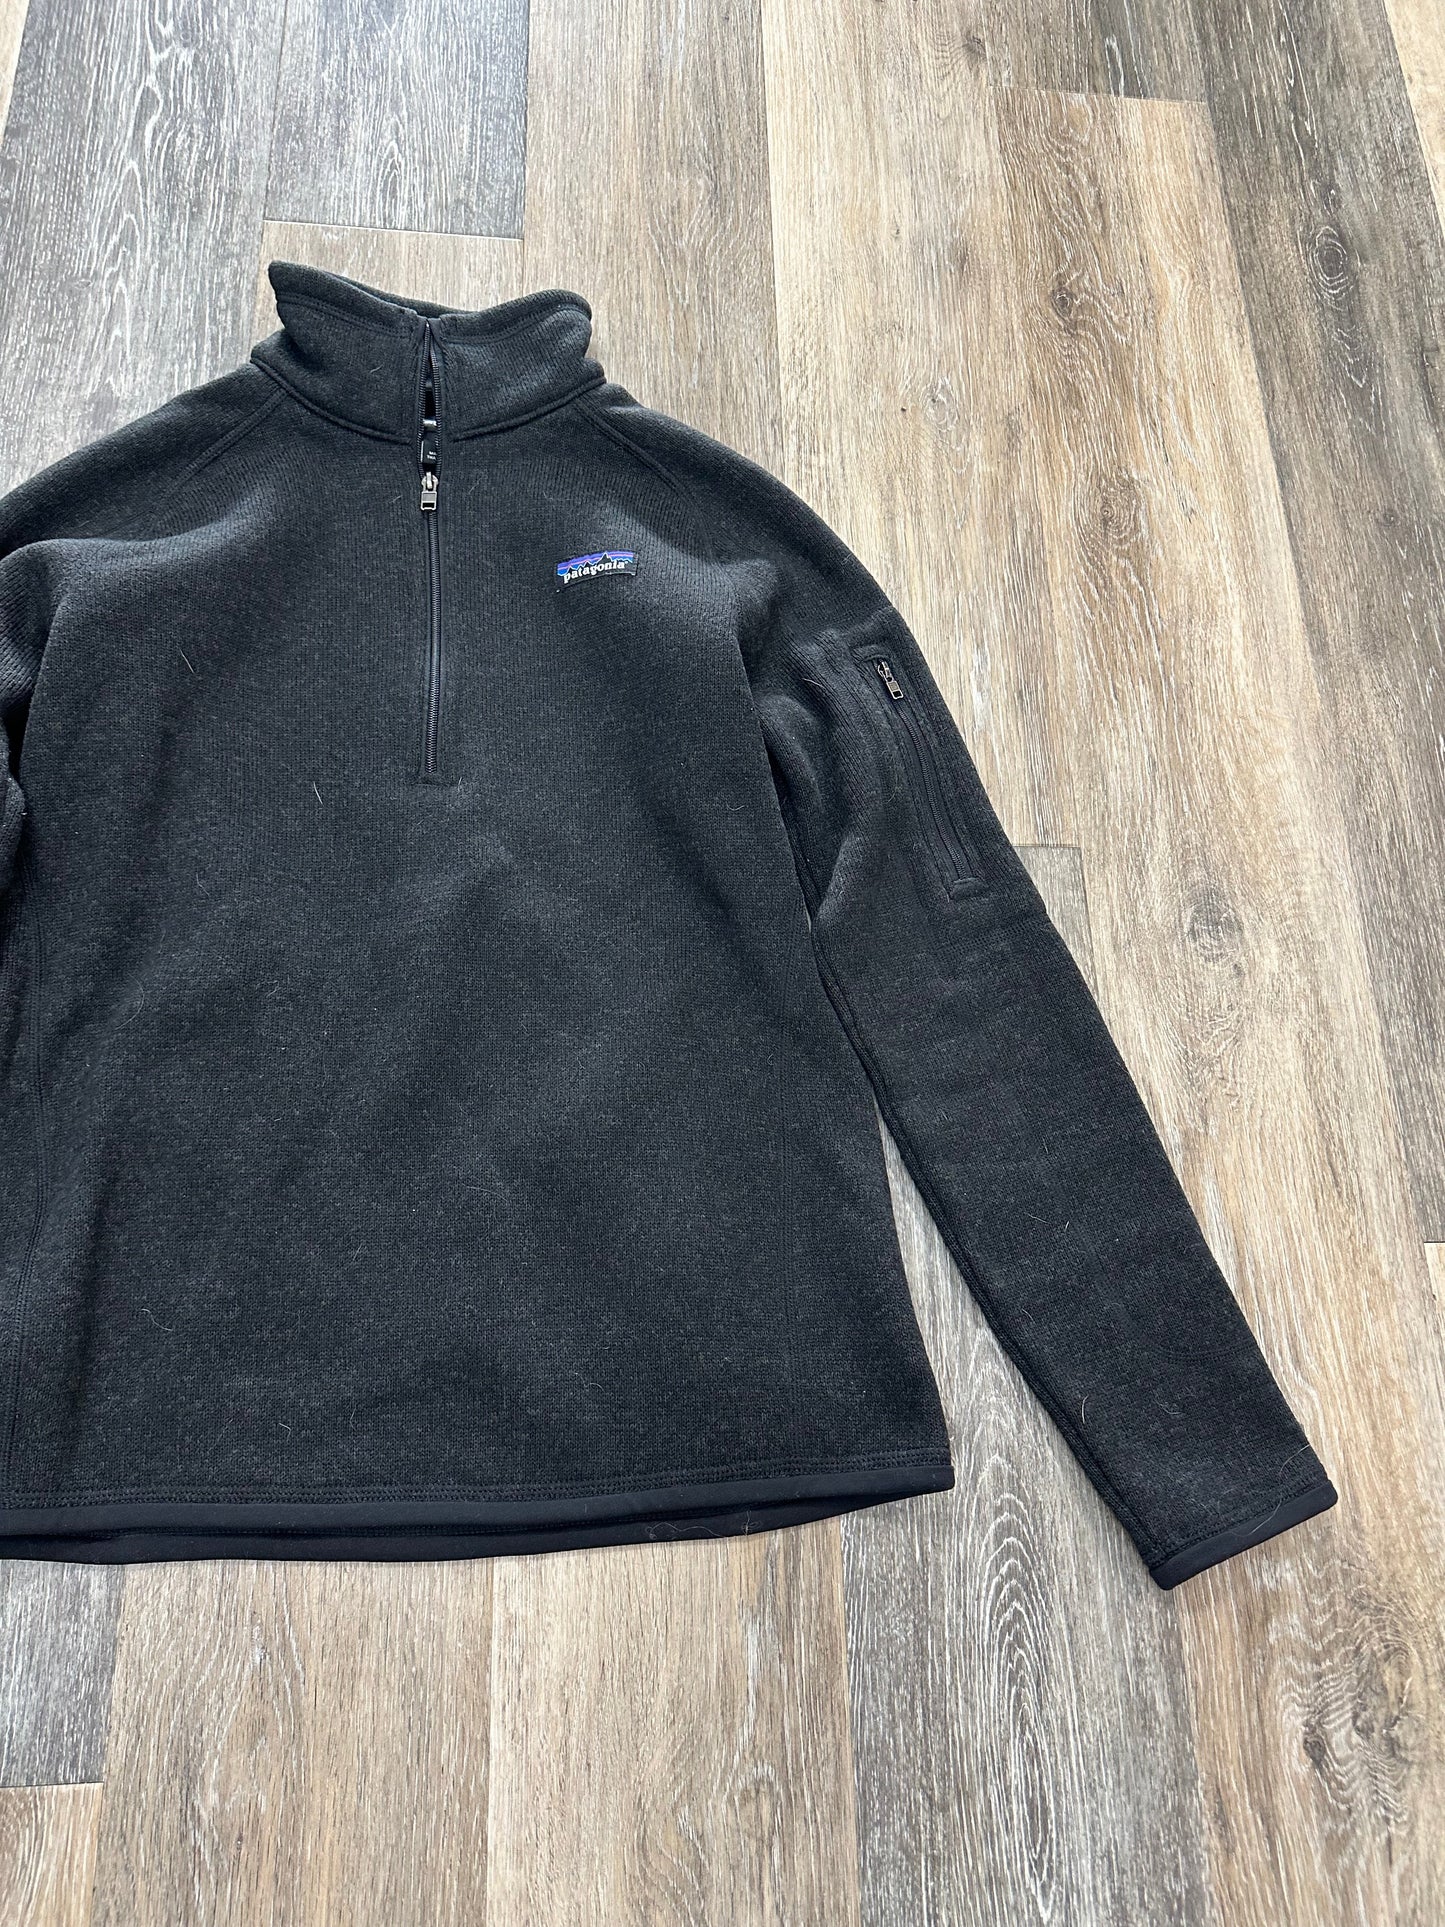 Black Athletic Sweatshirt Collar Patagonia, Size S